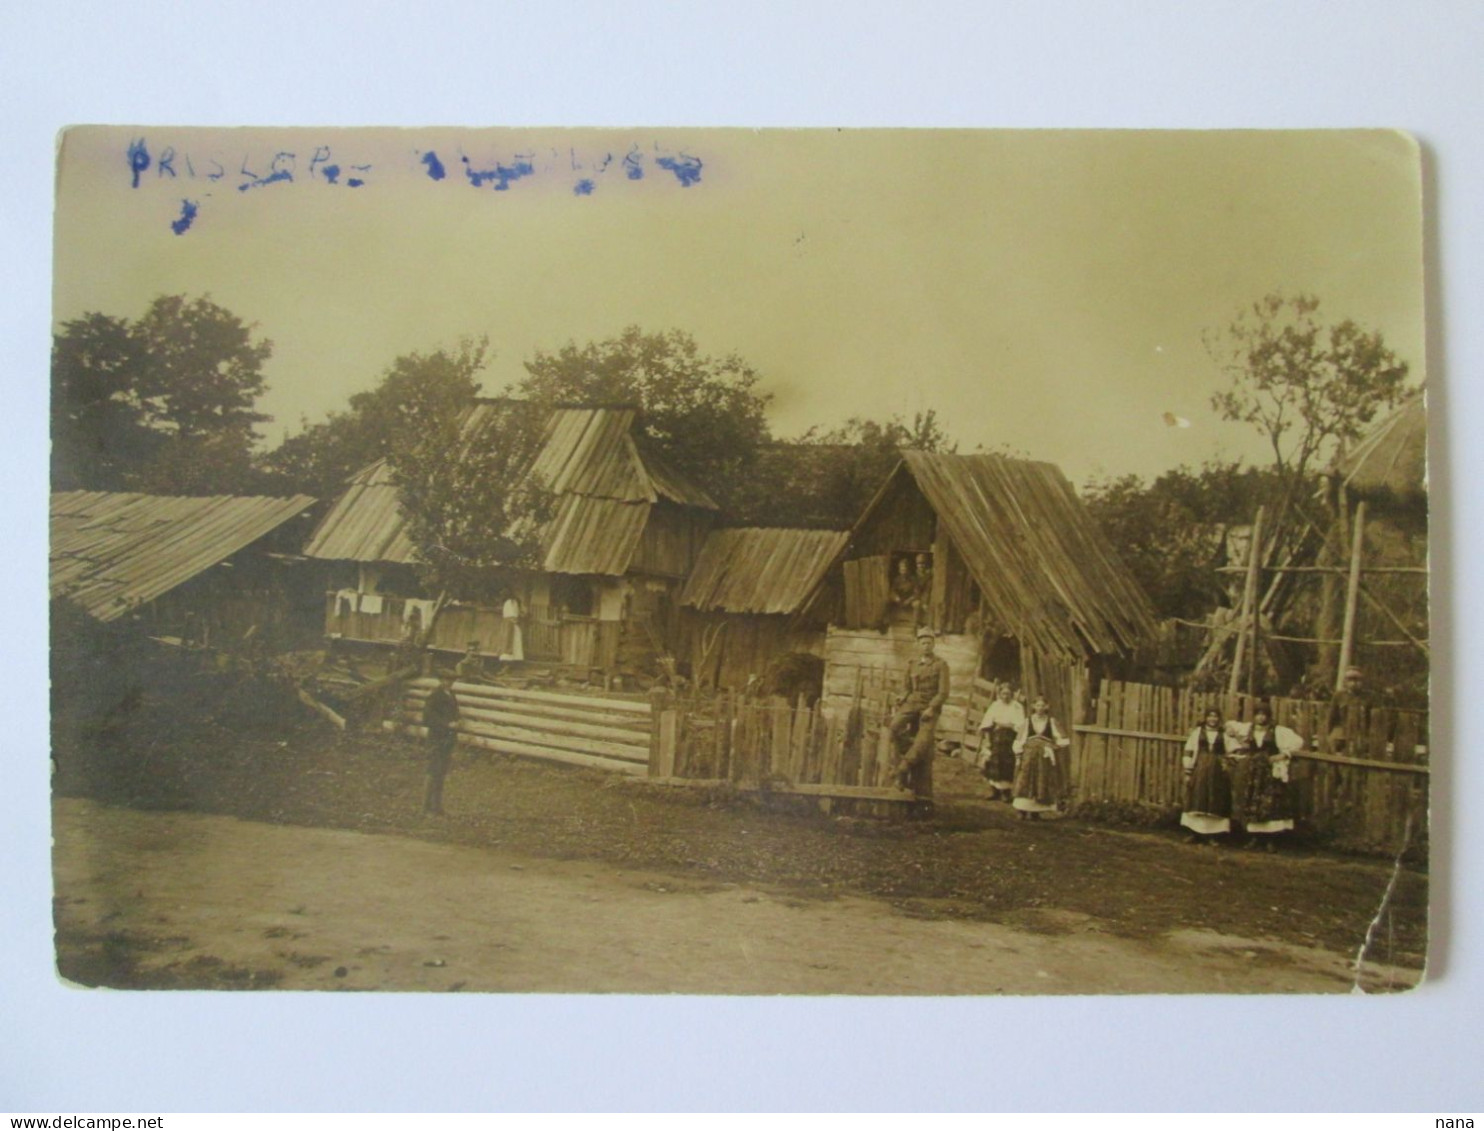 Slovakia-Village Carte Postale Photo 1931/Village In Slovakia Photo Postcard From 1931 - Slovakia